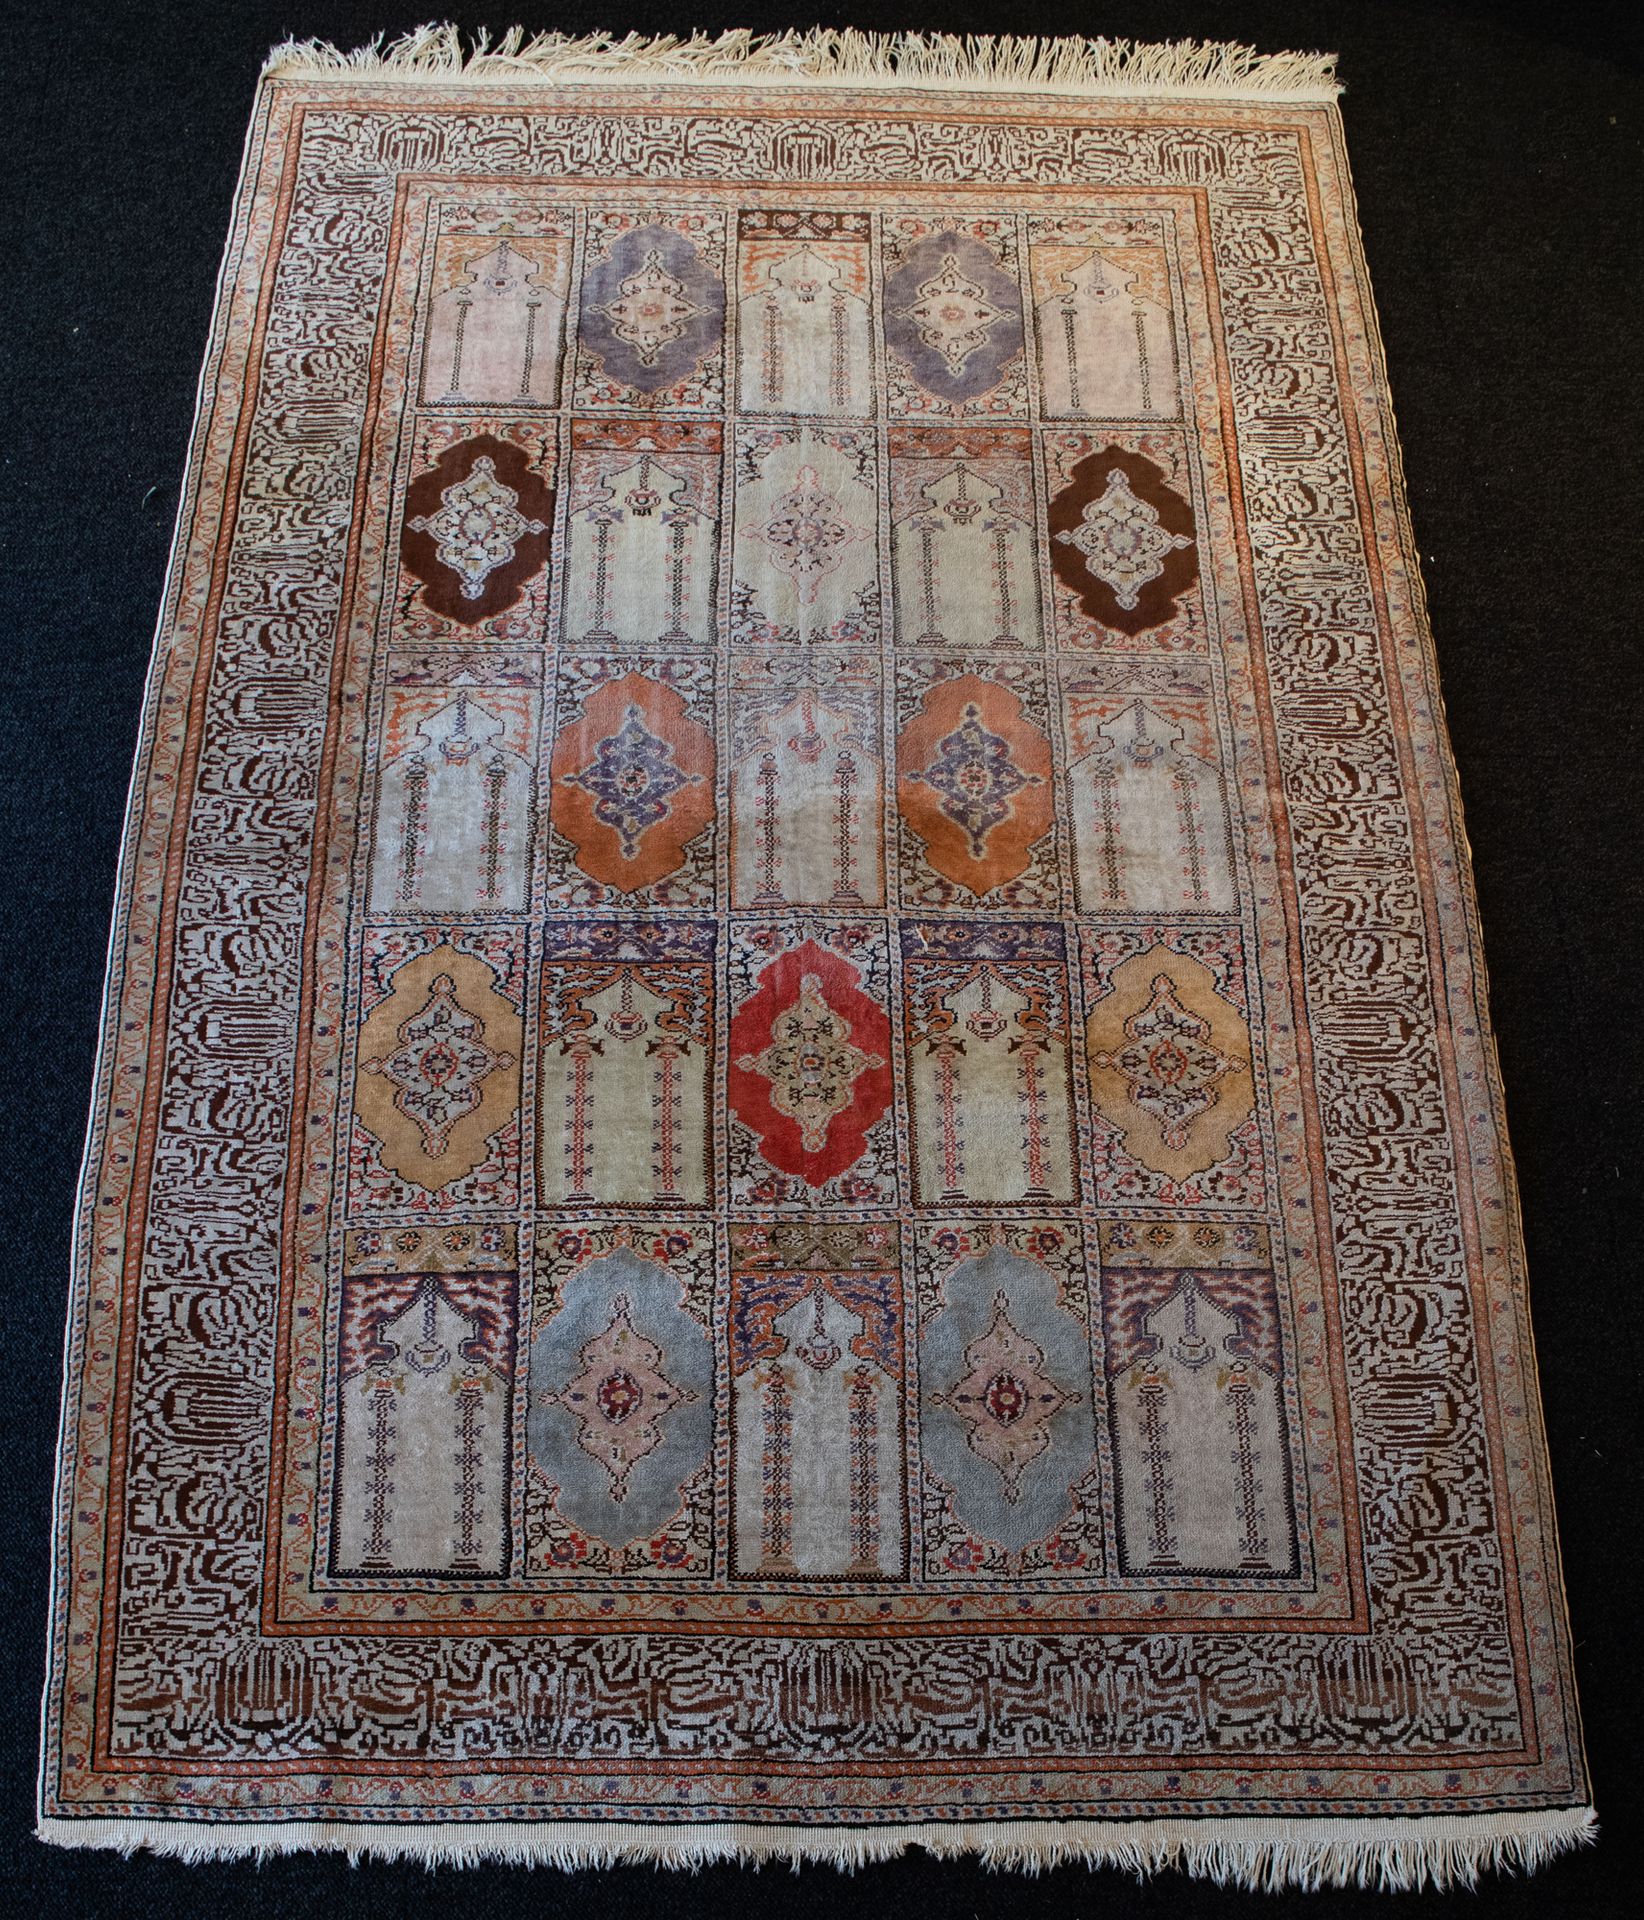 Null 丝毯Kayser
丝毯Kayser Zijden tapijt Kayser。190 x 120 cm
190 x 120 cm